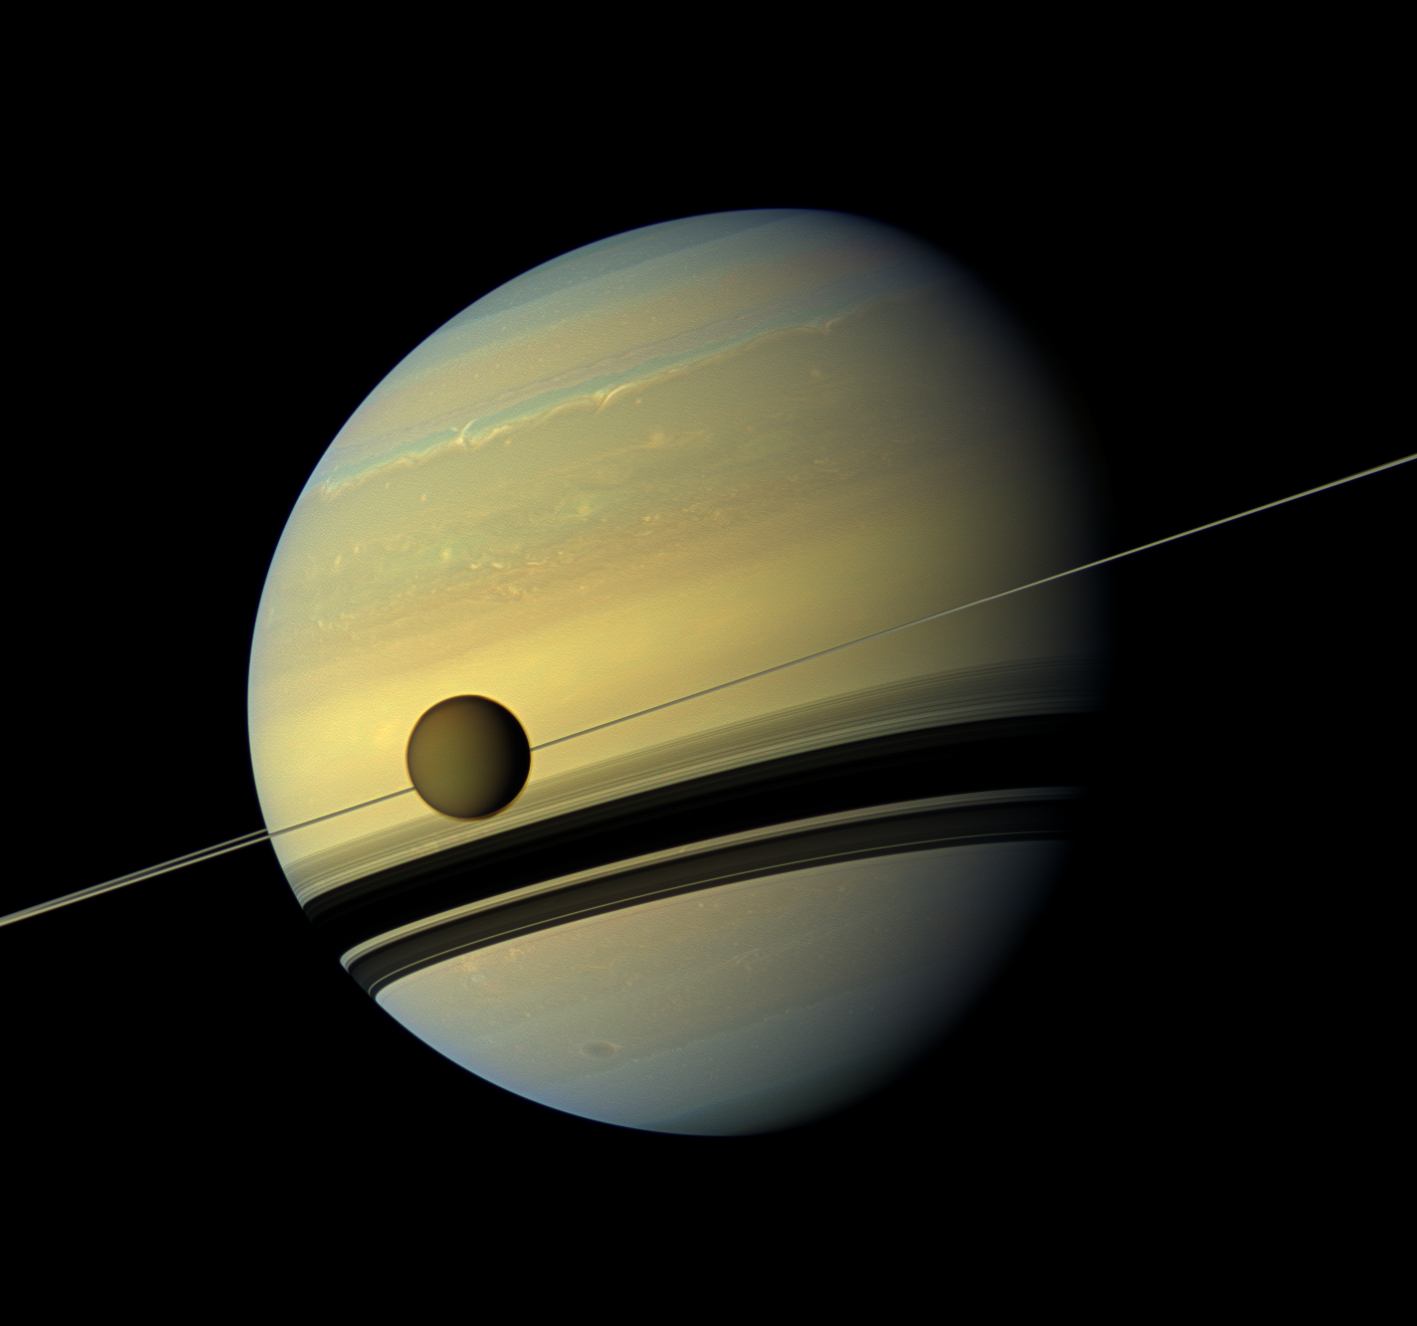 Saturn’s largest moon